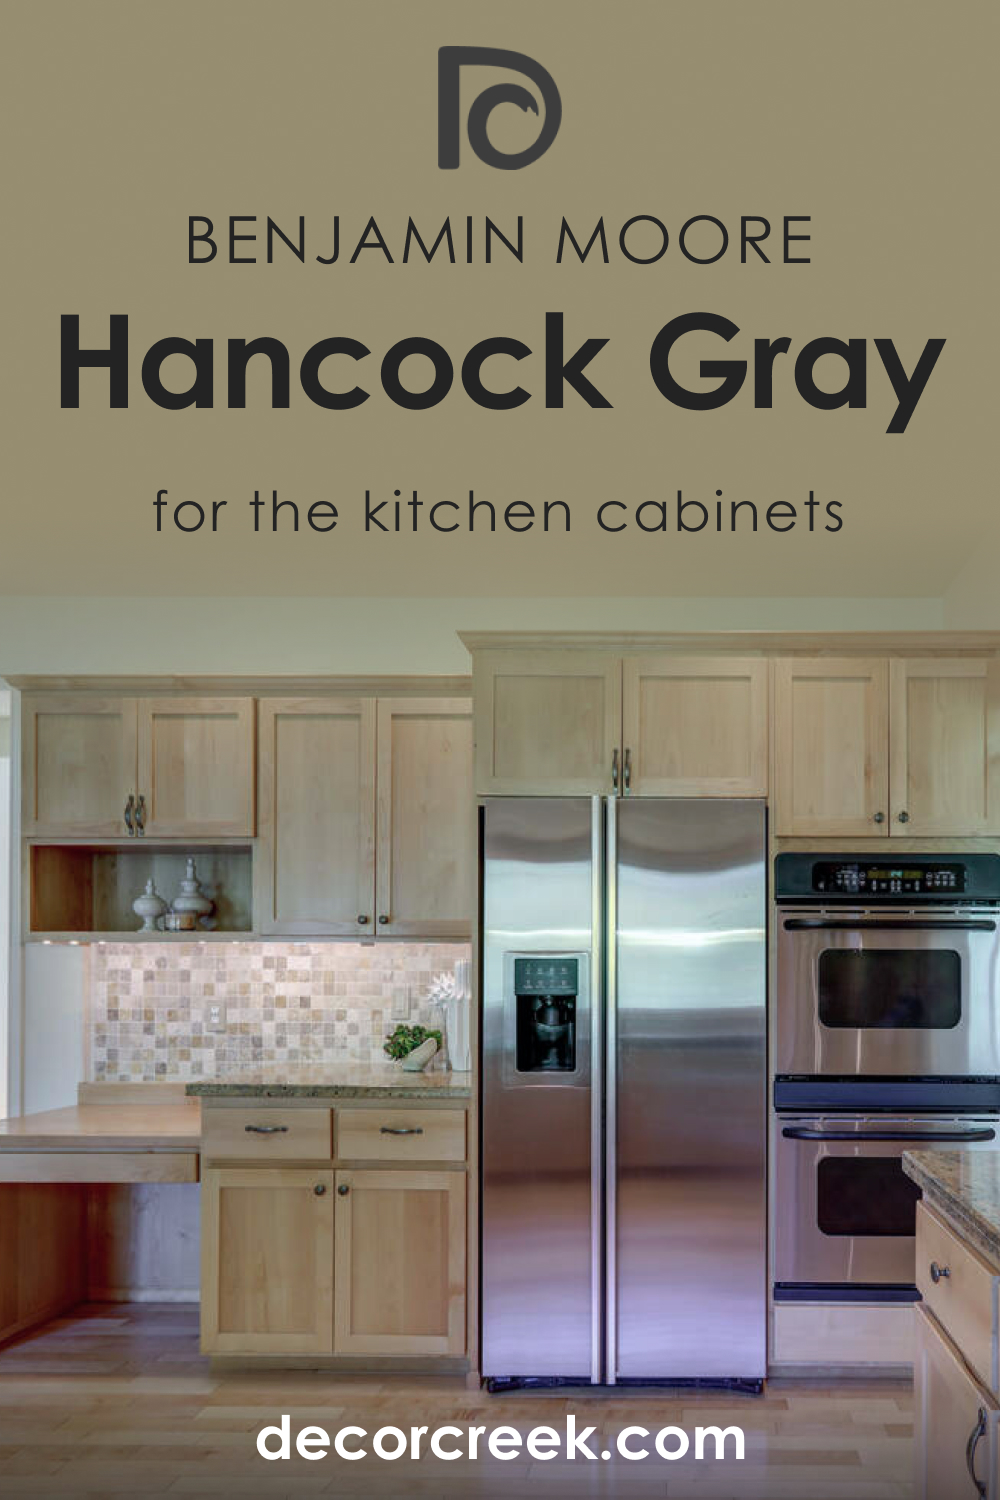 Hancock Gray HC-97 on the Kitchen Cabinets